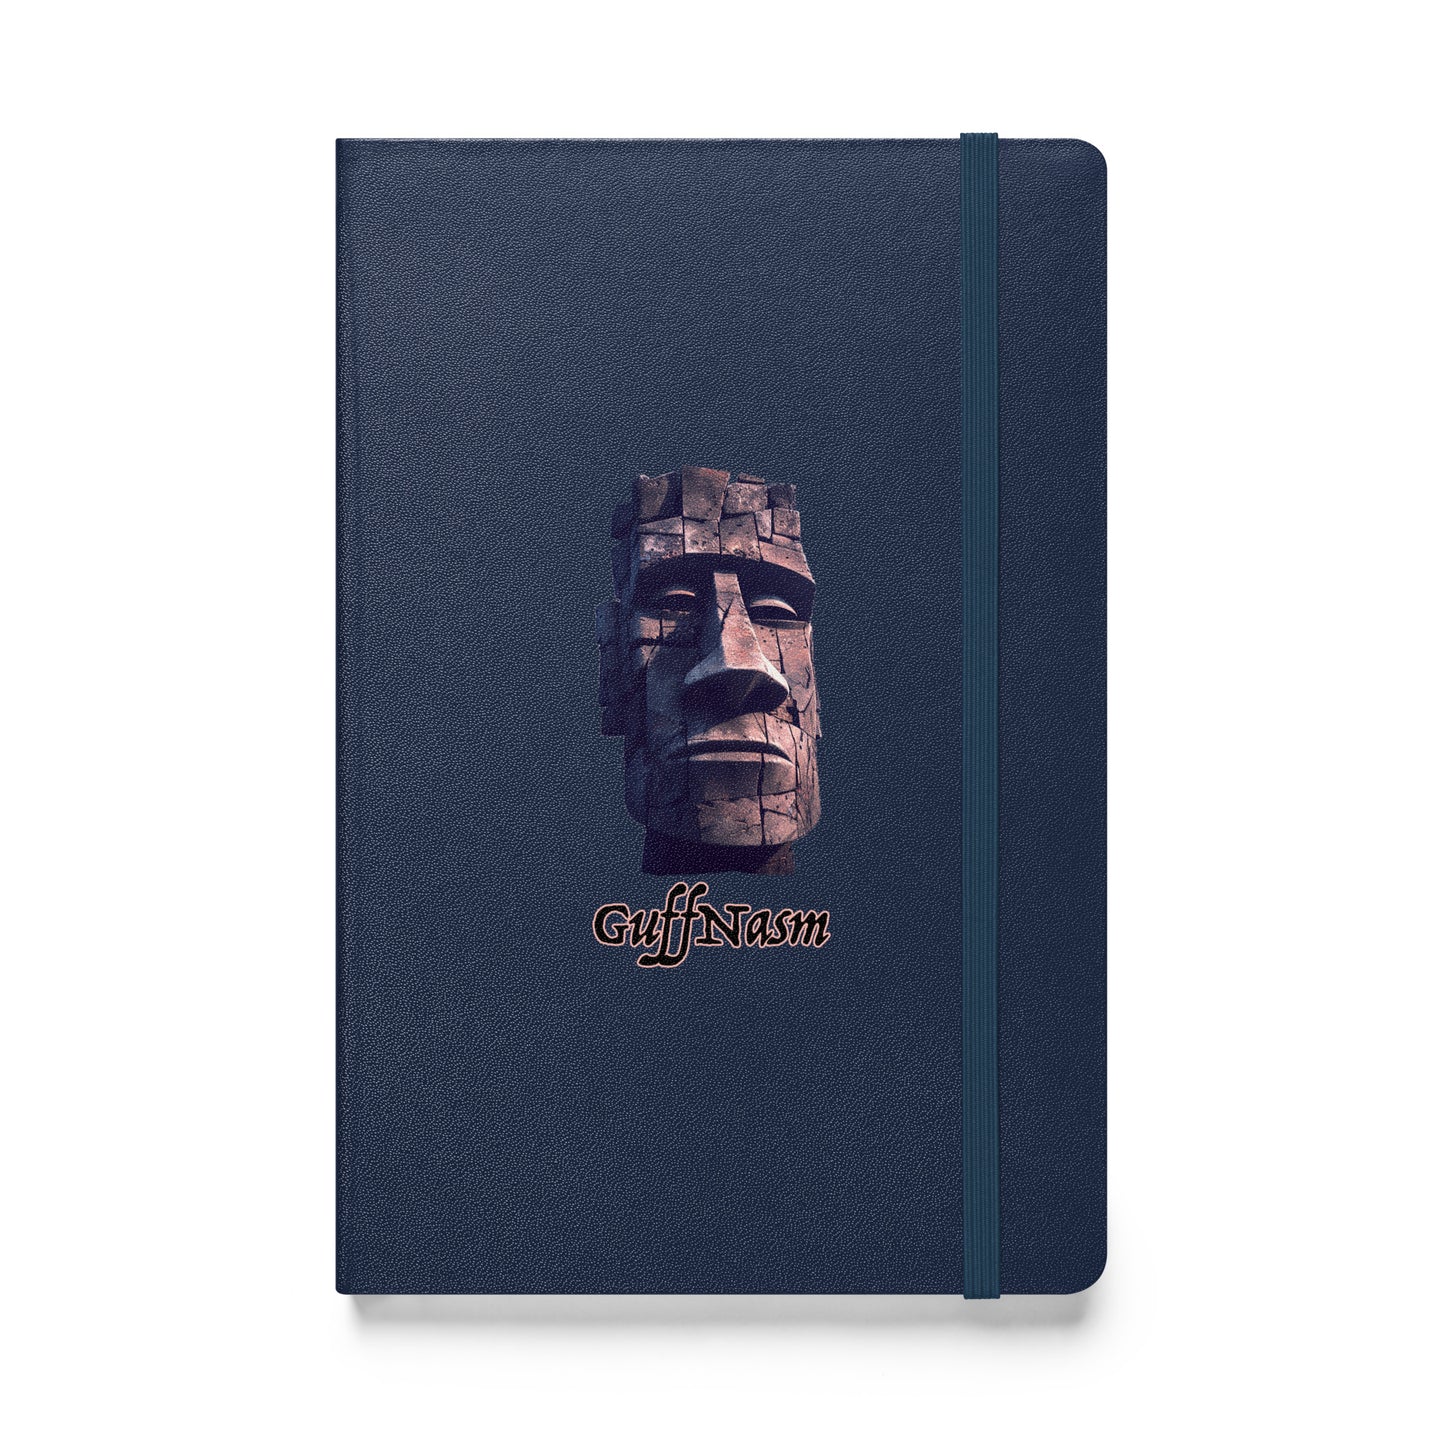 GuffMan - Hardcover bound notebook